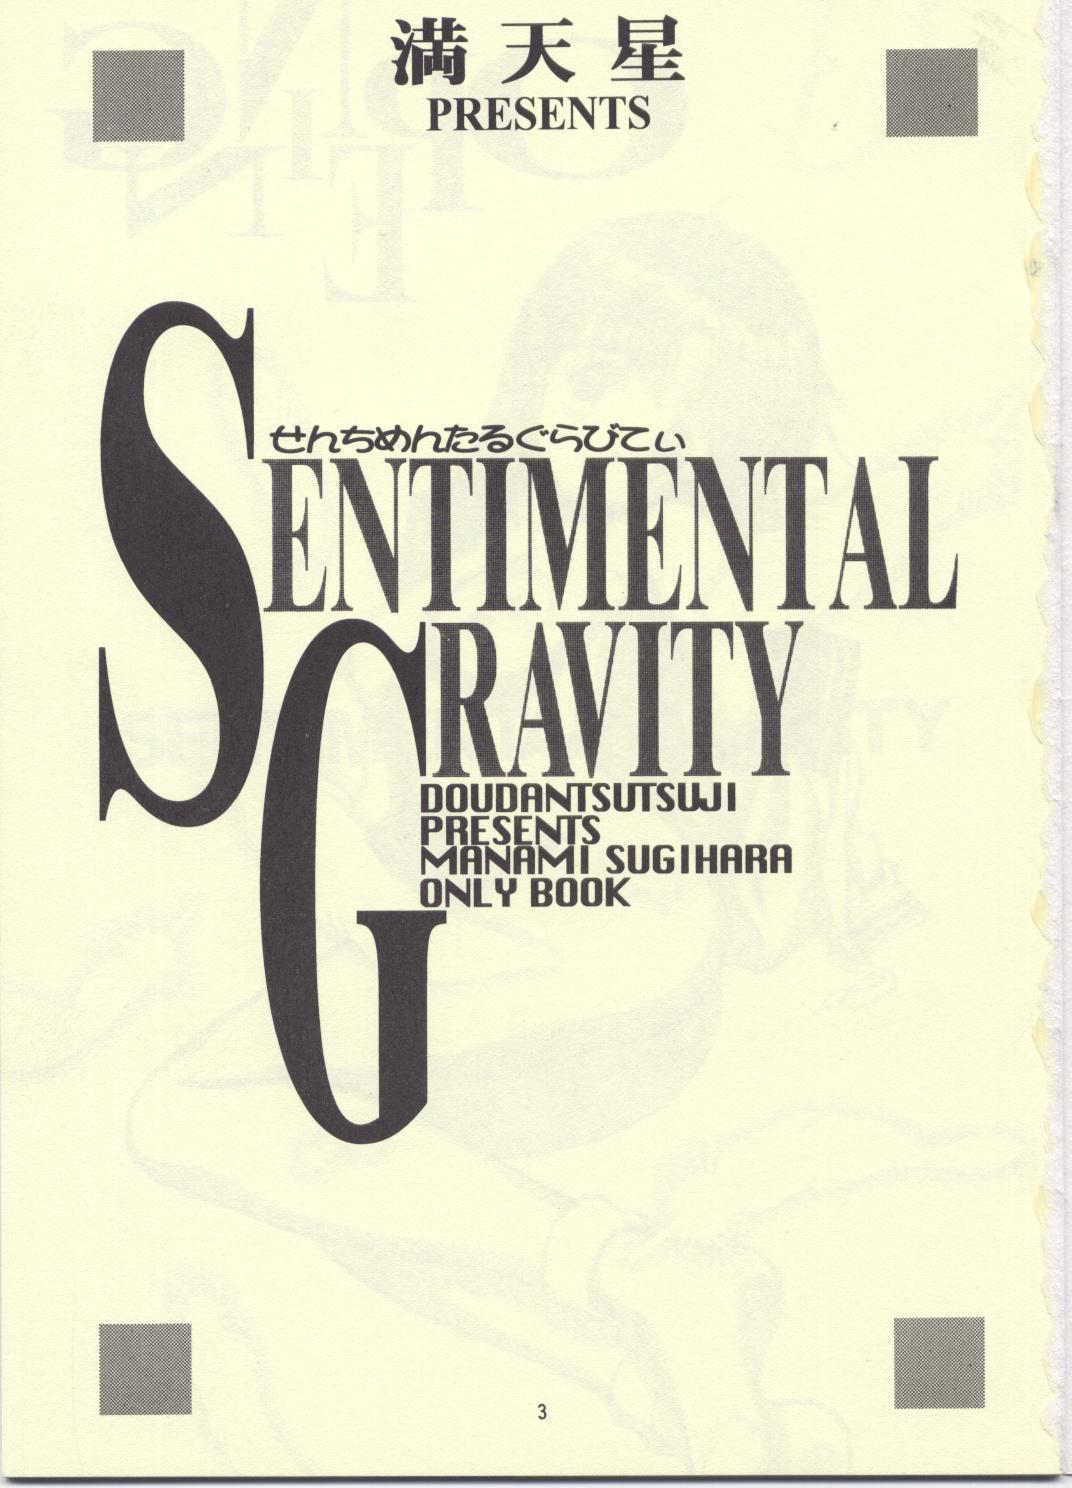 Sloppy Sentimental Gravity - Sentimental graffiti Stepsiblings - Page 2